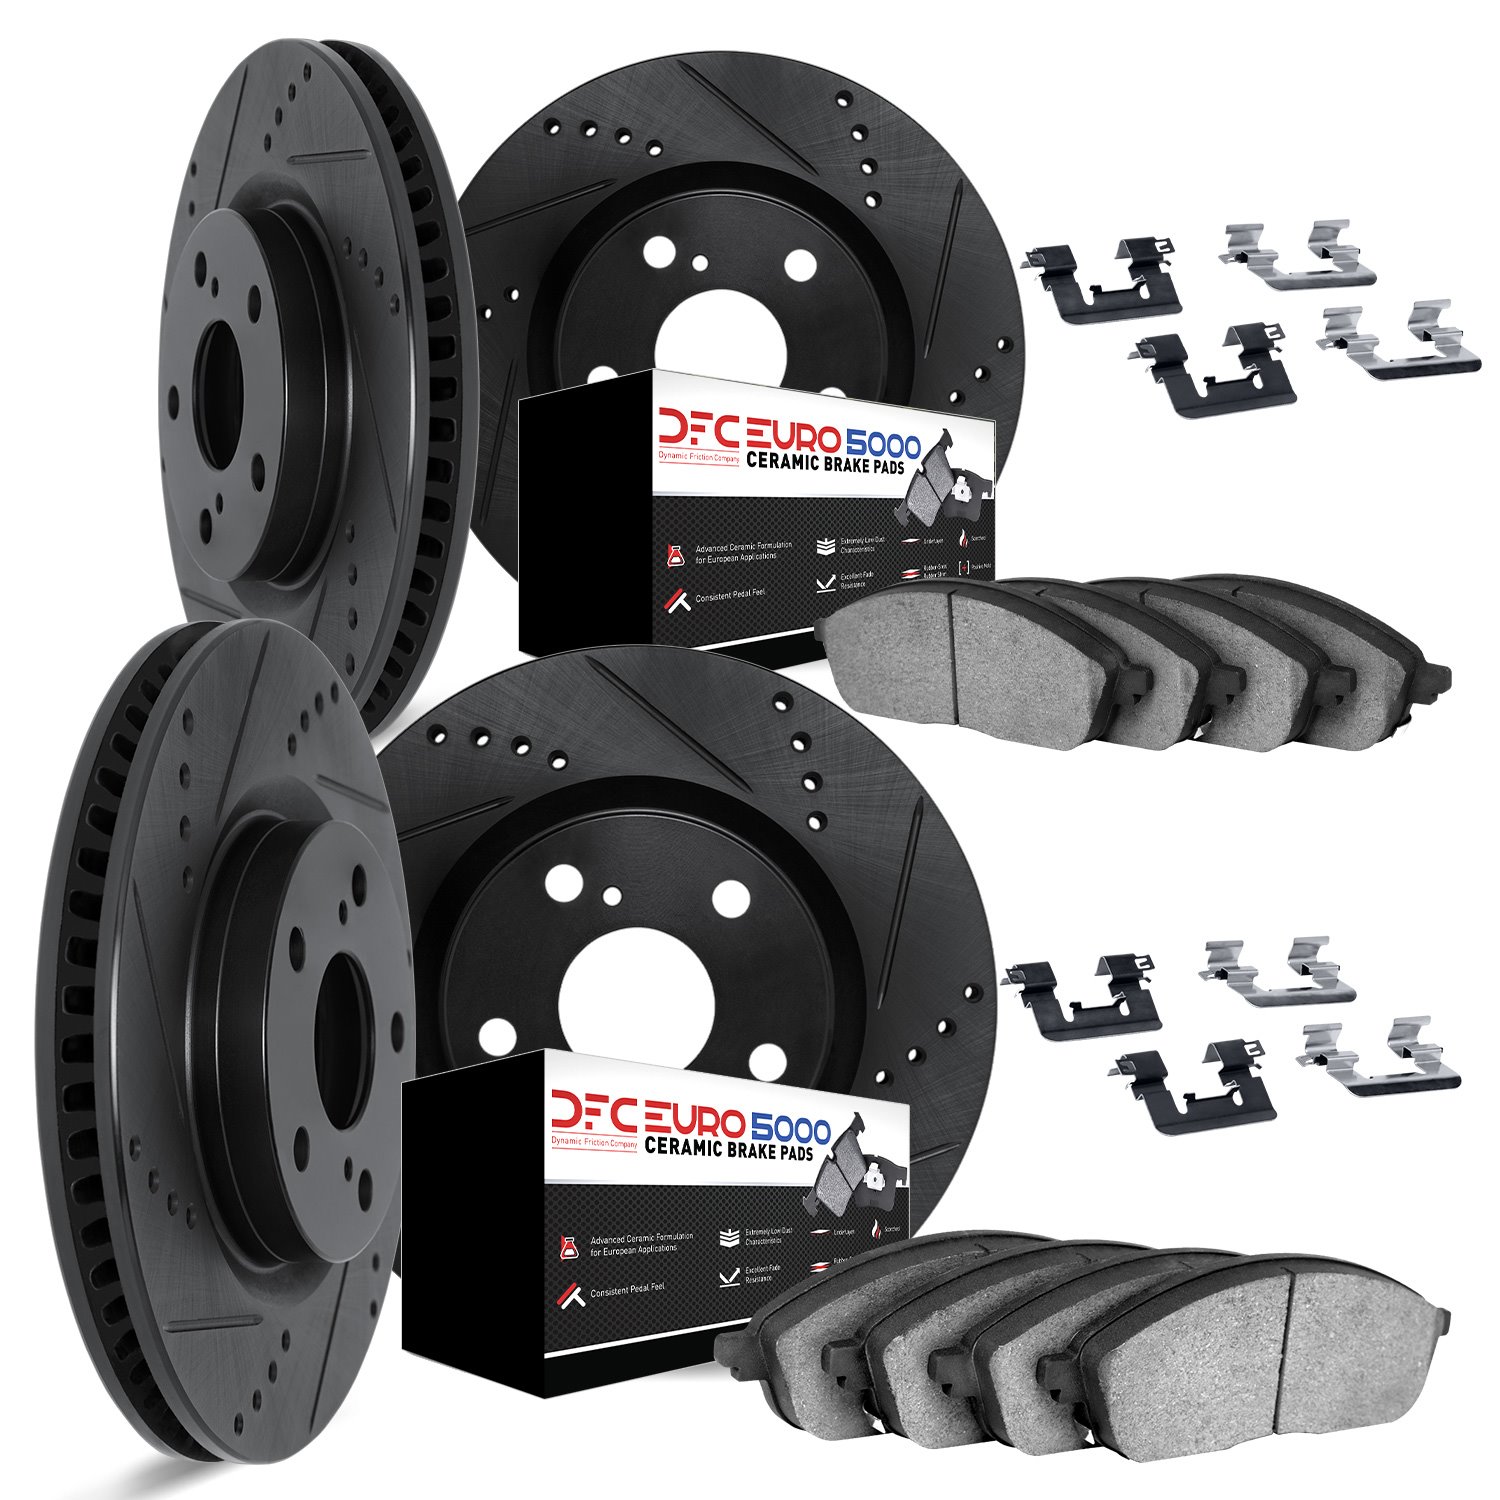 8614-31023 Drilled/Slotted Brake Rotors w/5000 Euro Ceramic Brake Pads Kit & Hardware [Black], 2008-2013 BMW, Position: Front an